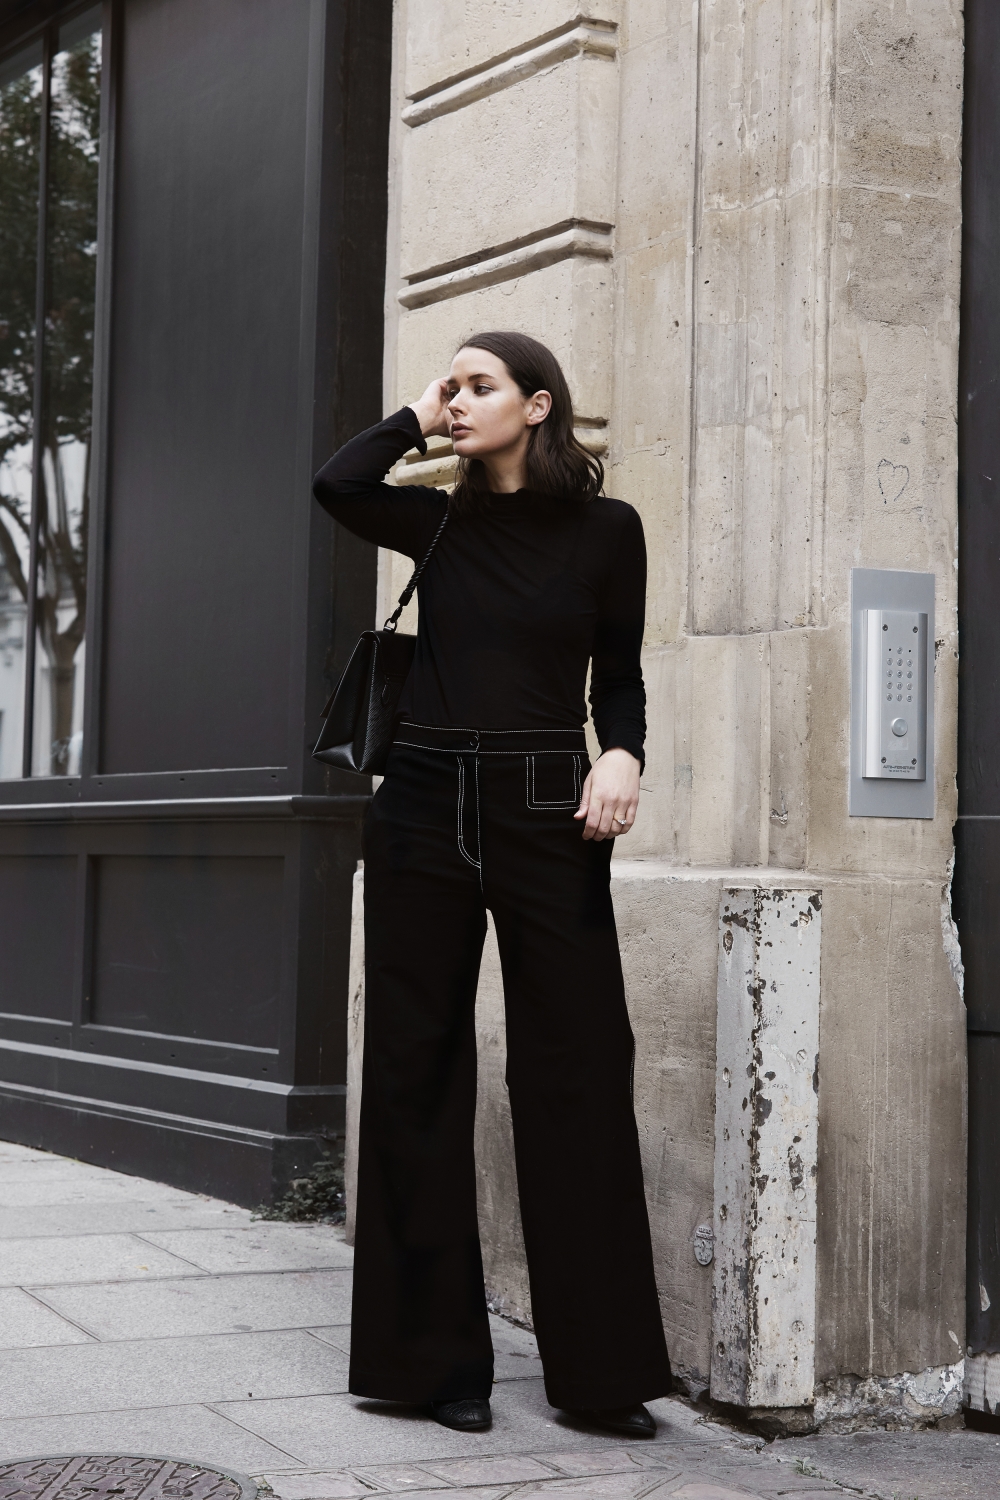 Louis Vuitton Black LV bag | All black outfits | Paris | Street Style | HarperandHarley